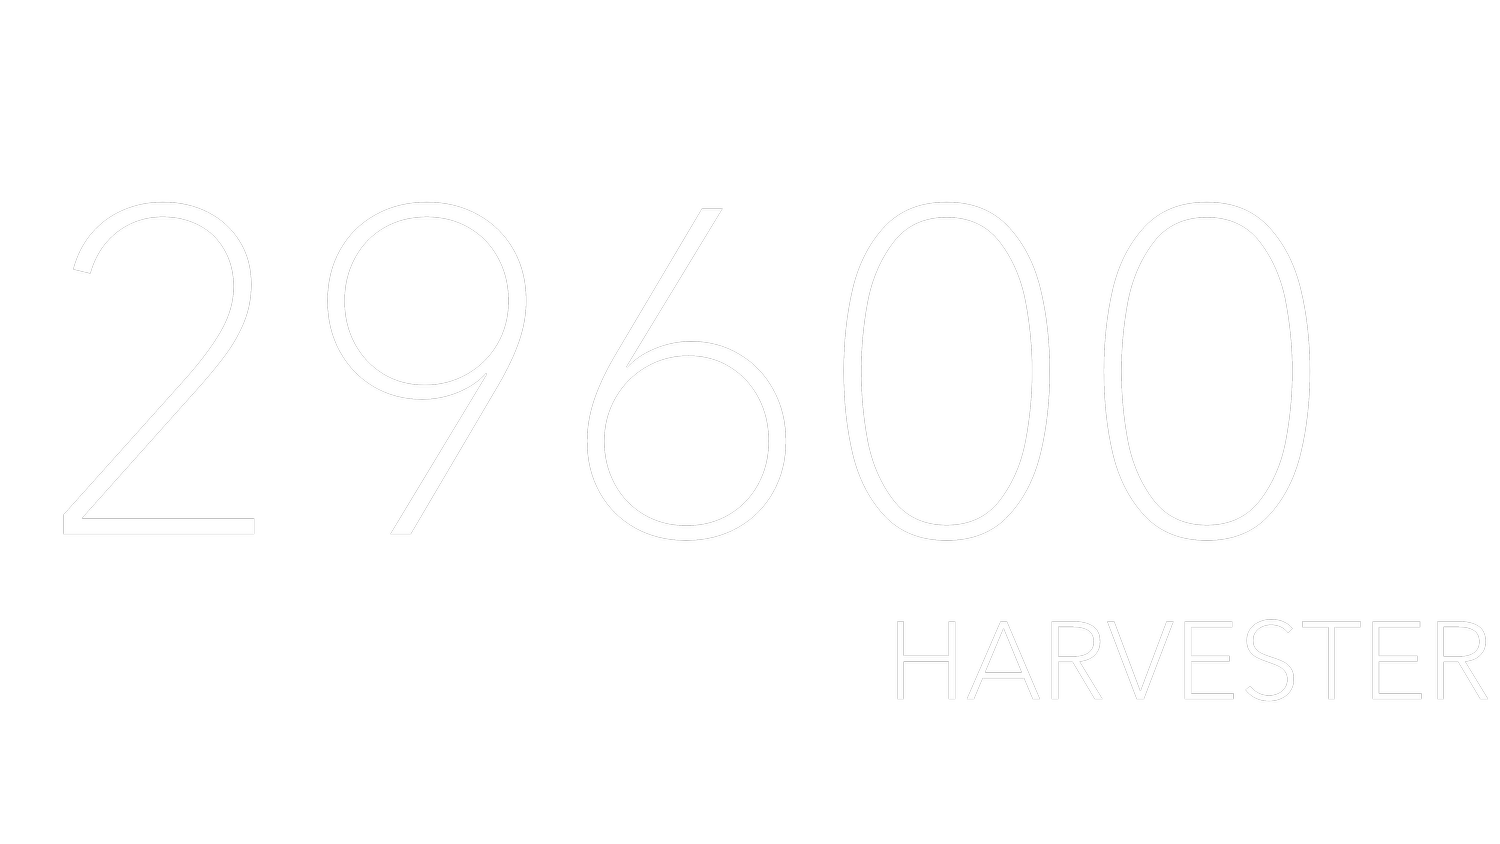 29600 Harvester